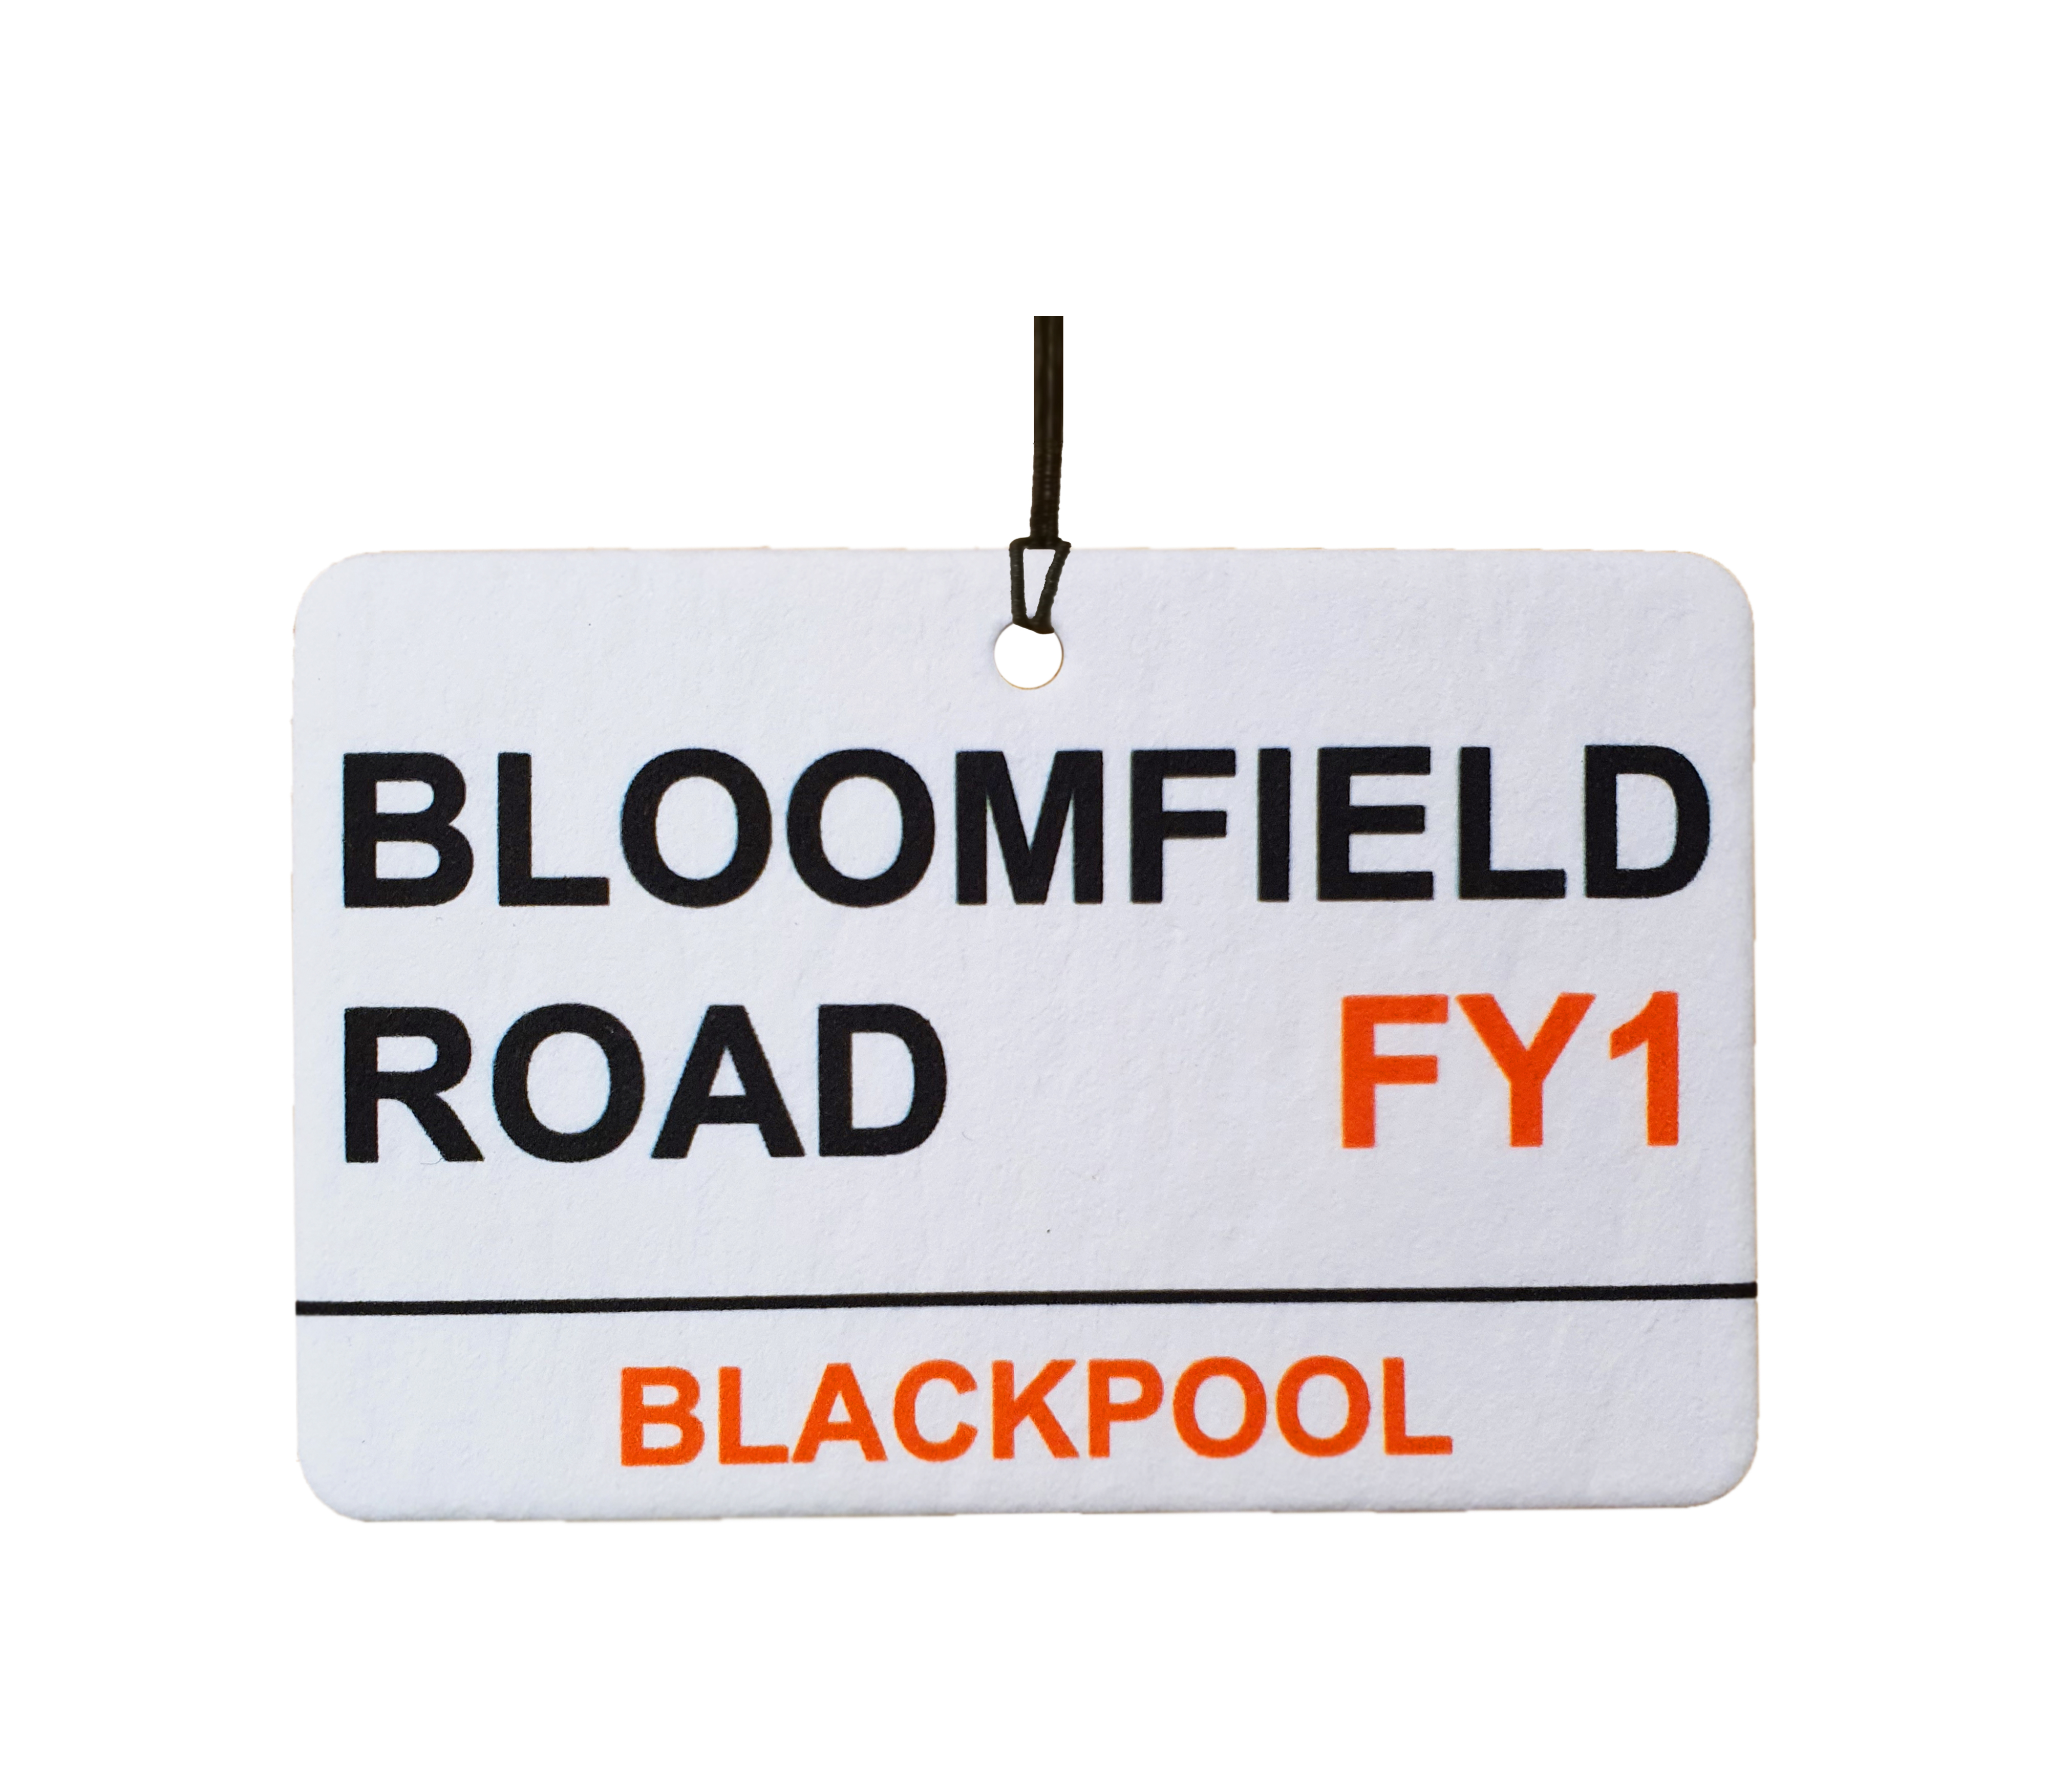 Blackpool / Bloomfield Rd Street Sign